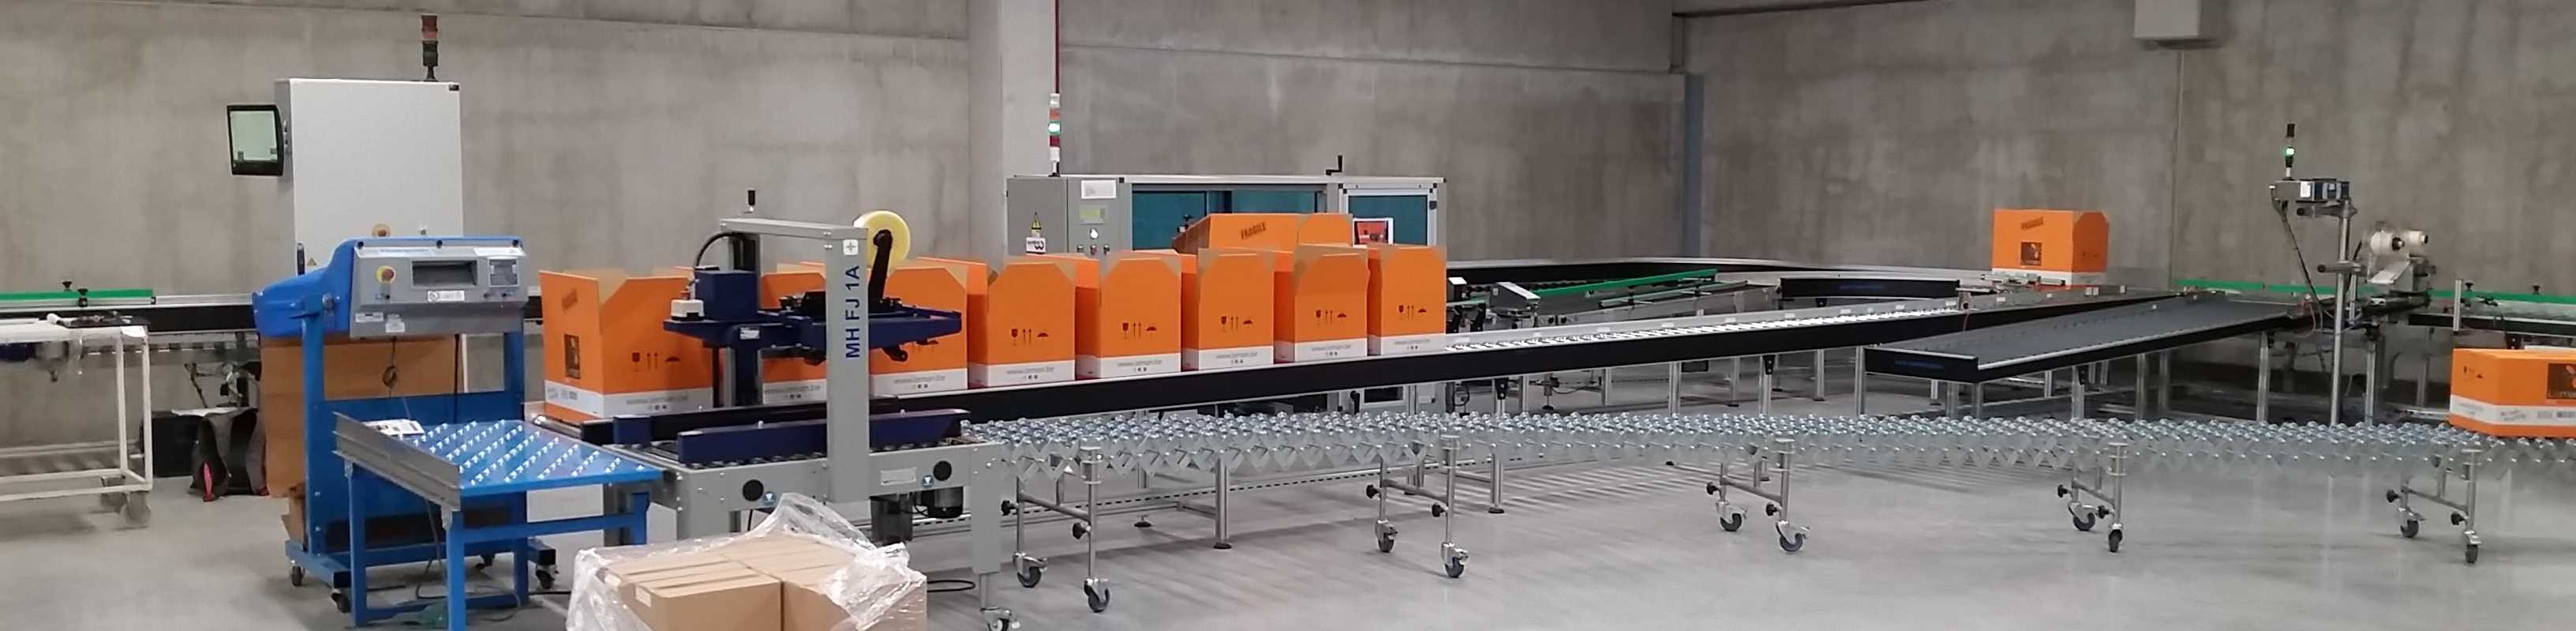 IA Slider industriele automatisering LS Logistiek transport systeem rollenbanen banner